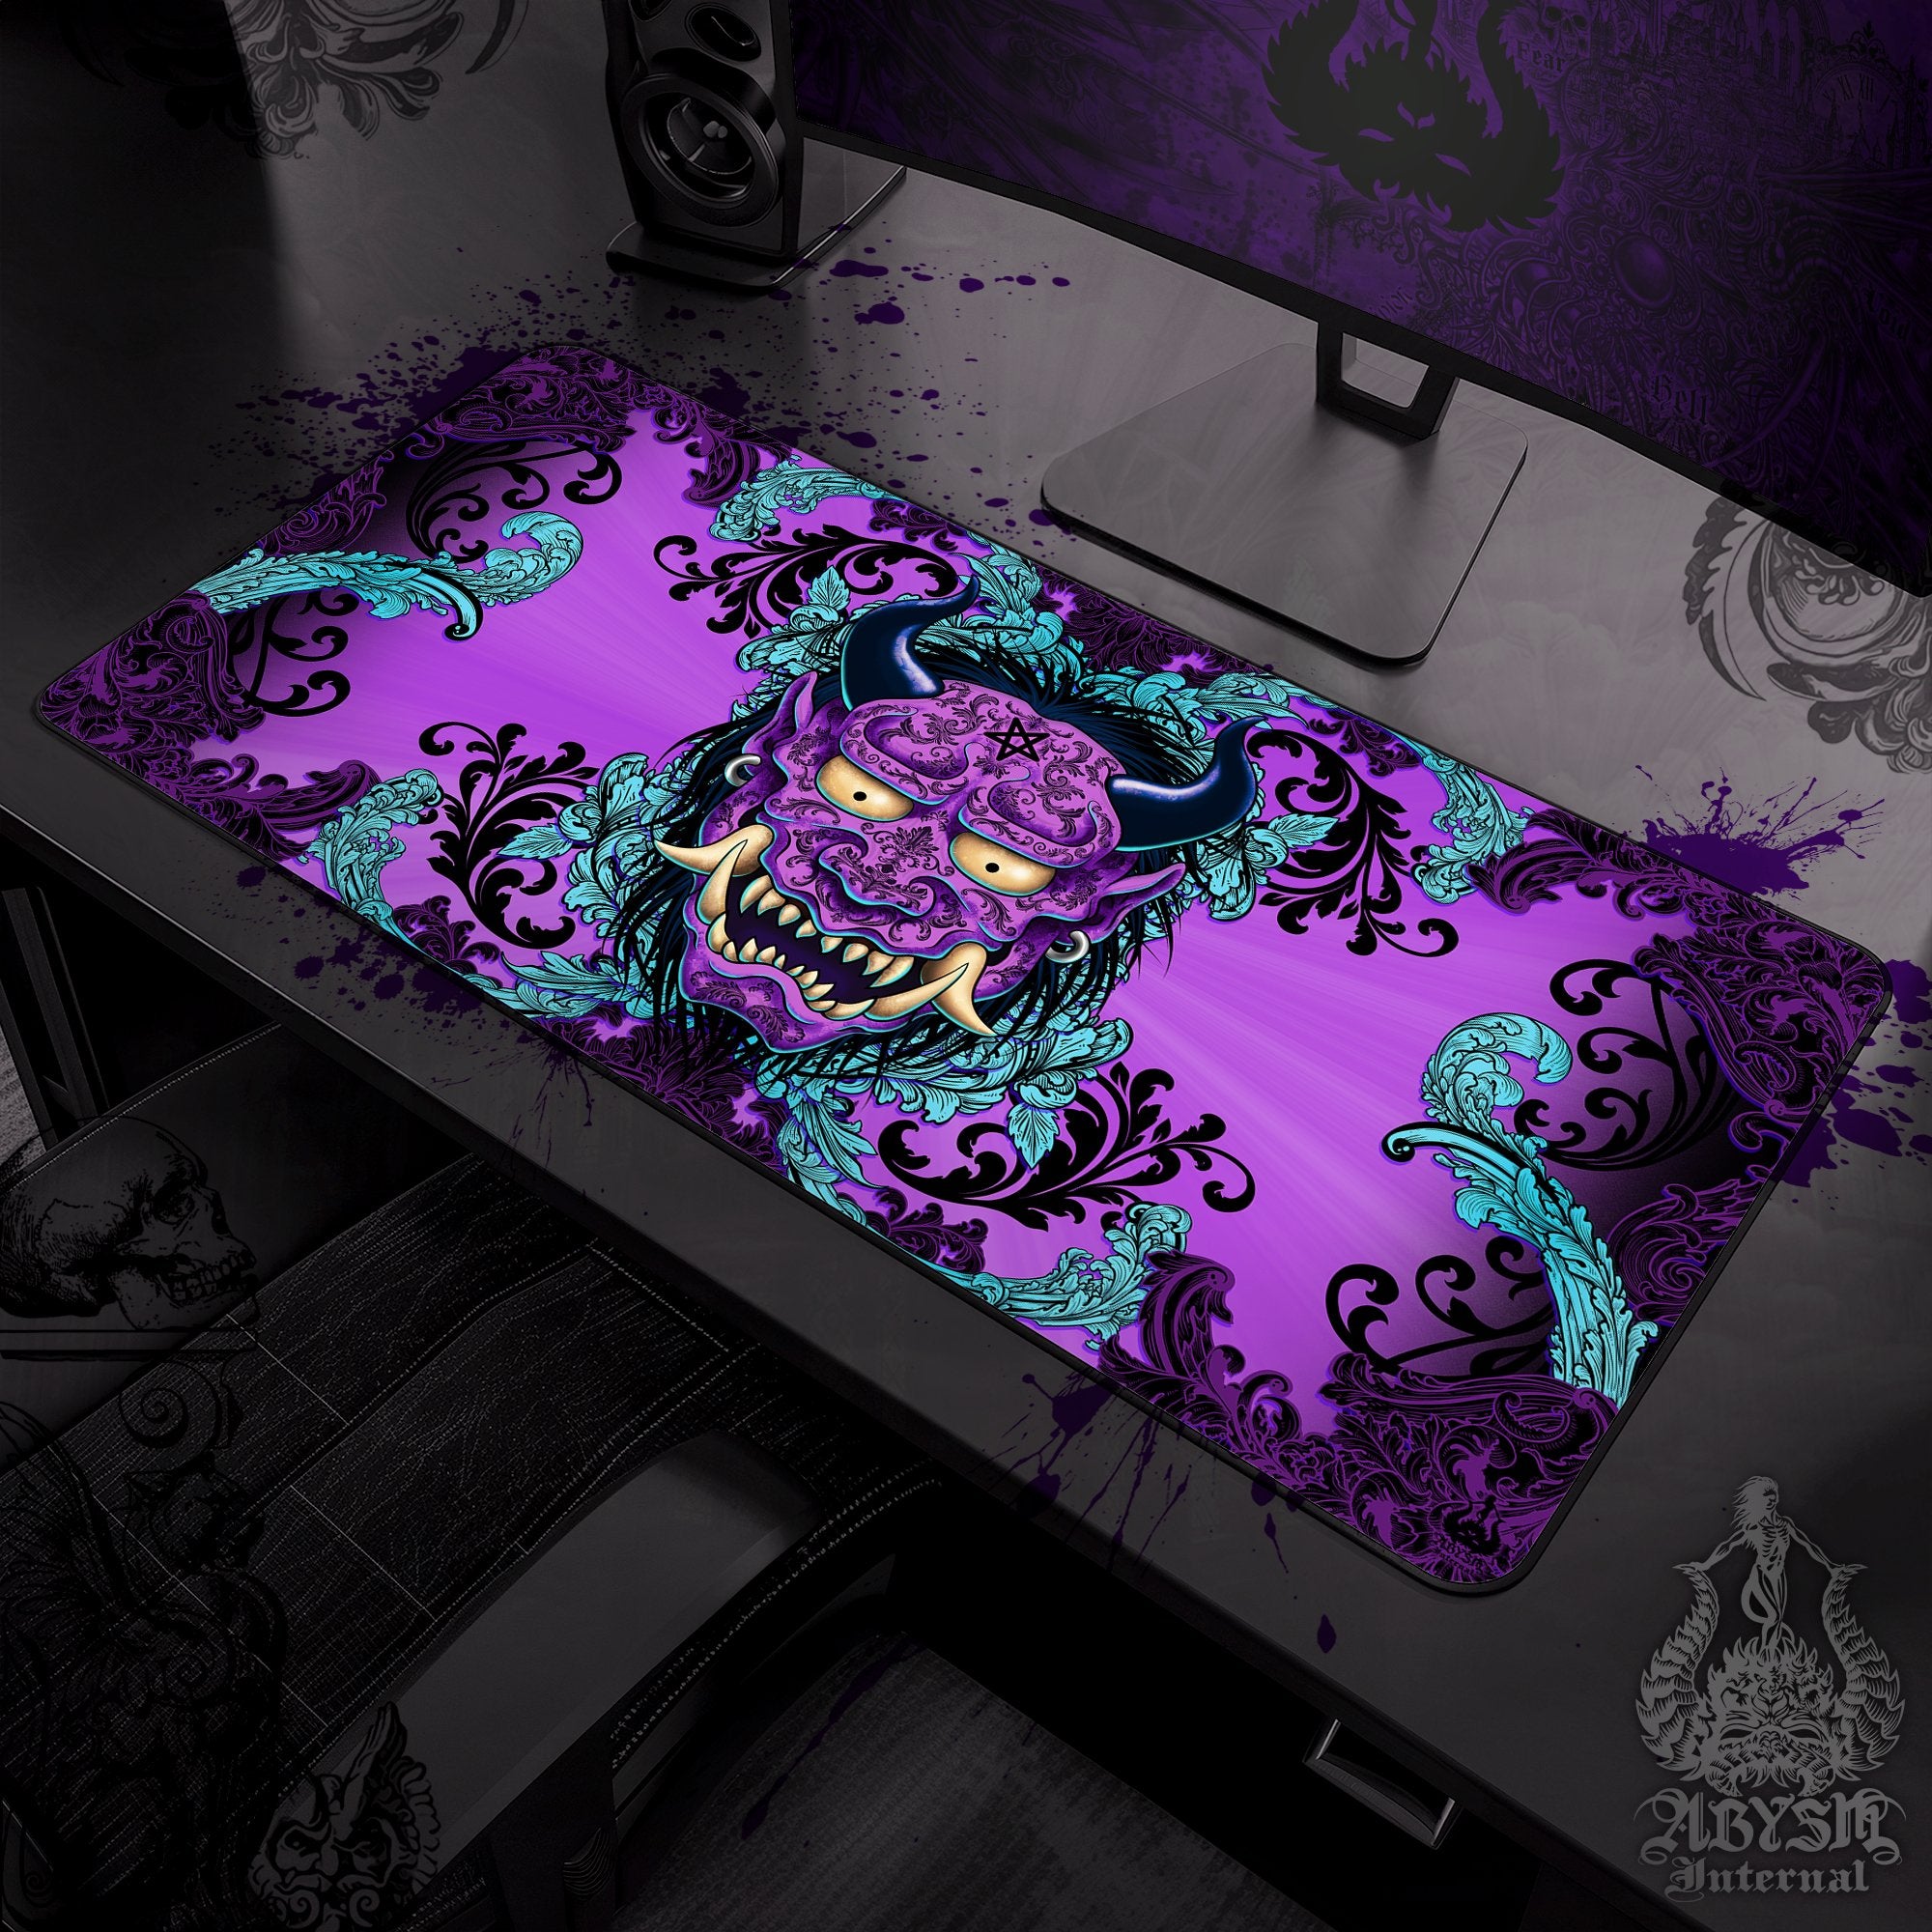 Oni Gaming Desk Mat, Japanese Demon Mouse Pad, Gamer Table Protector Cover, Pastel Goth Workpad, Anime Yokai Art Print - Black Purple - Abysm Internal